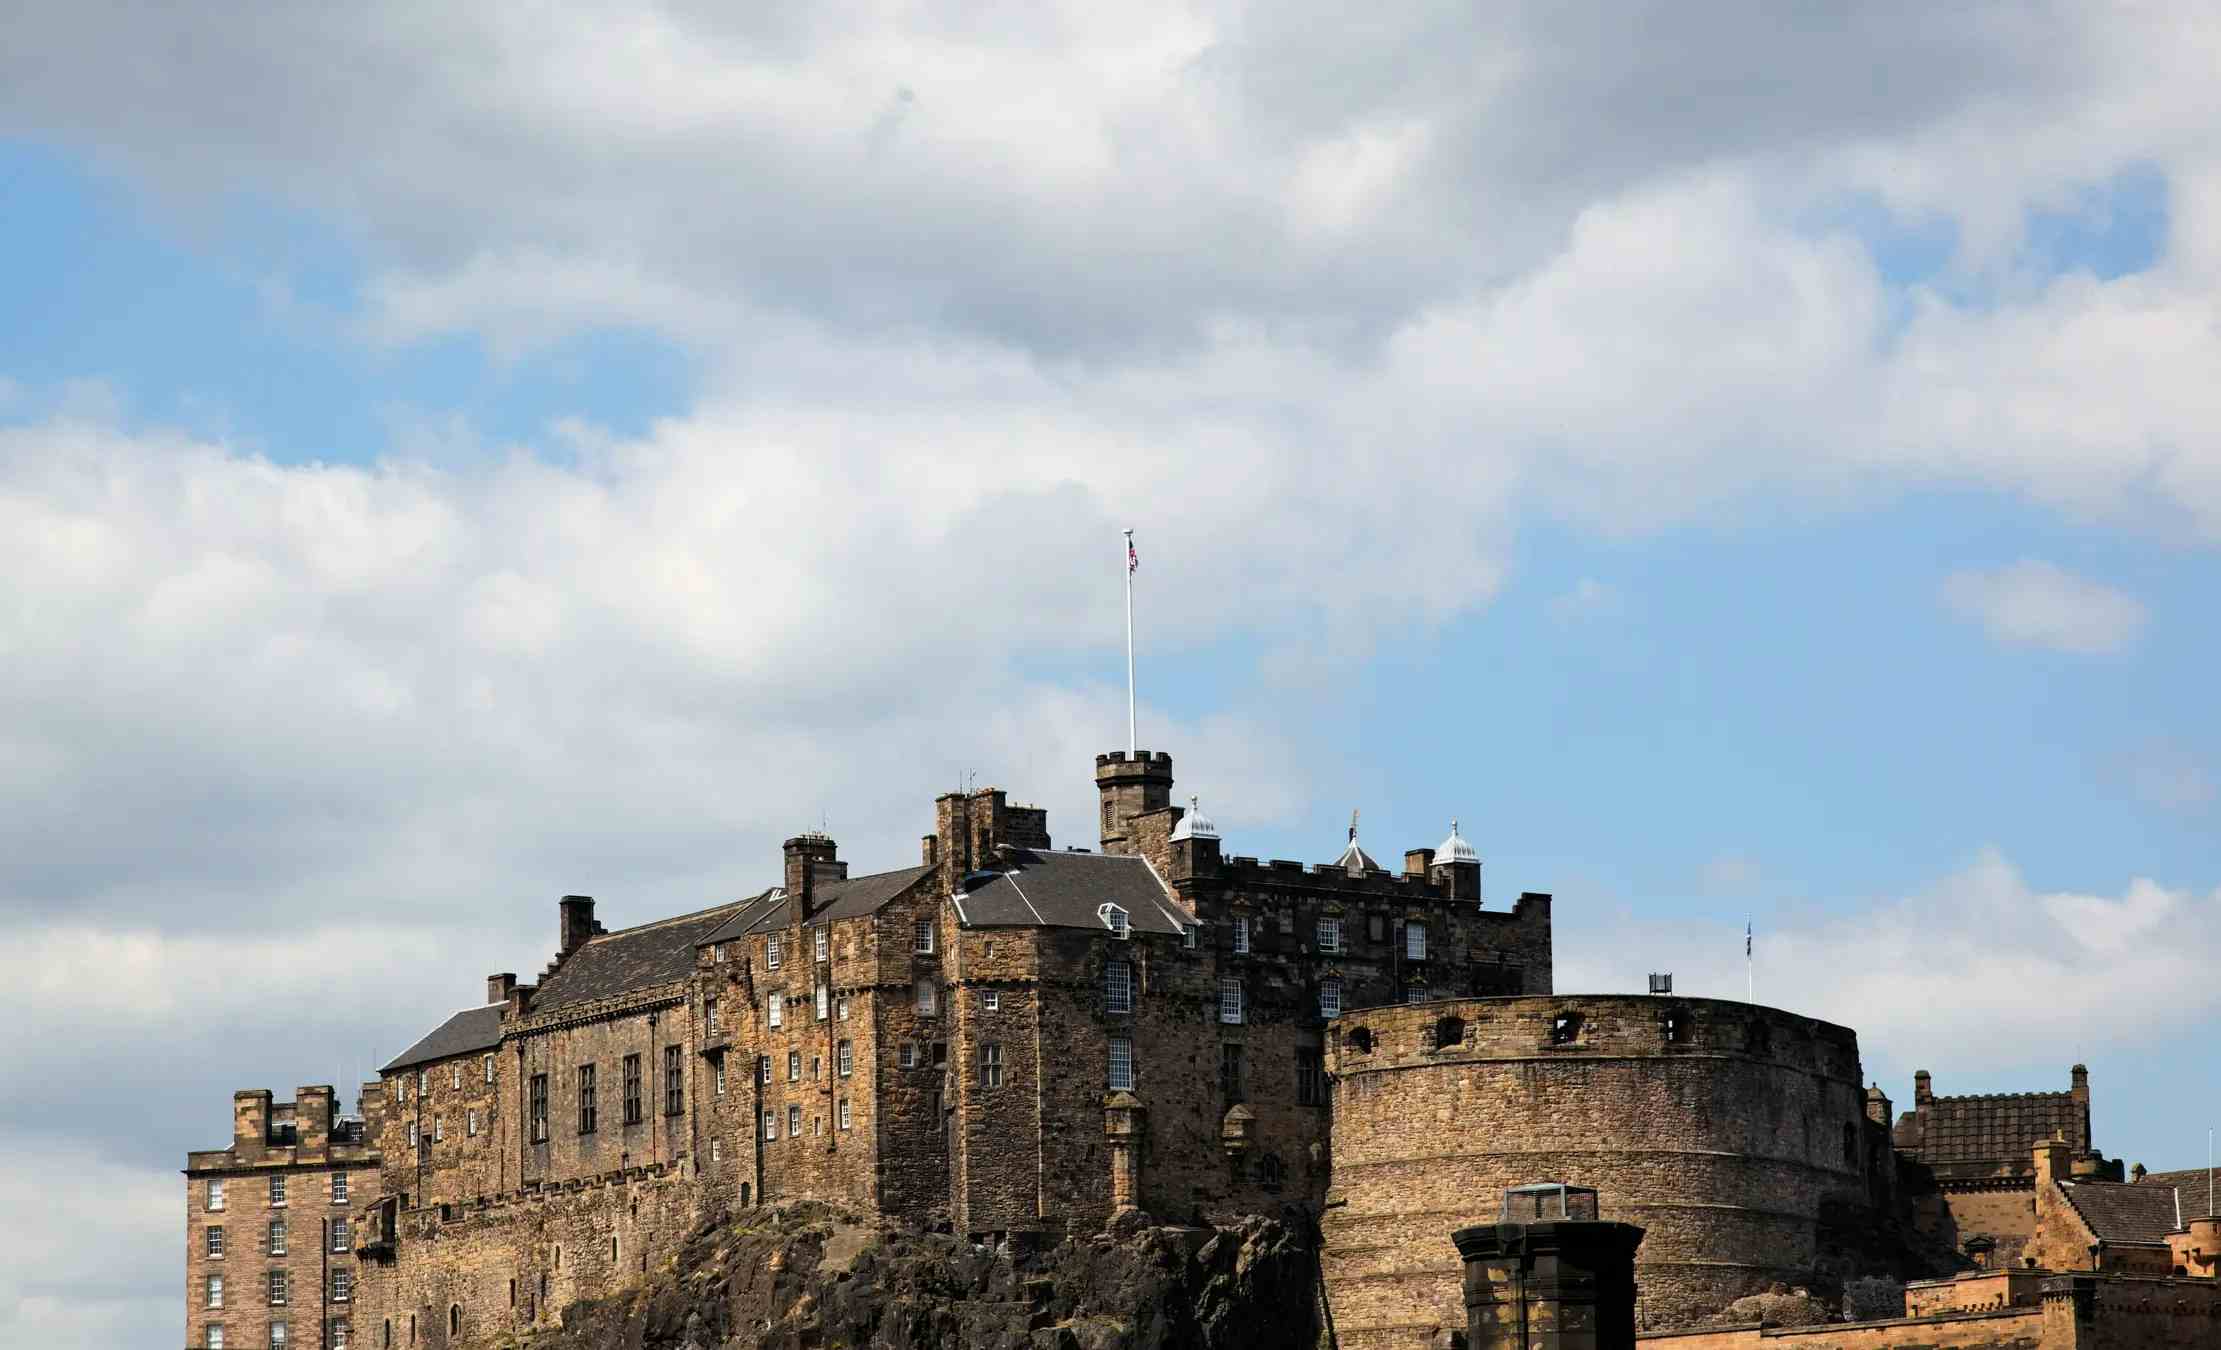 The Edinburgh Dungeon image